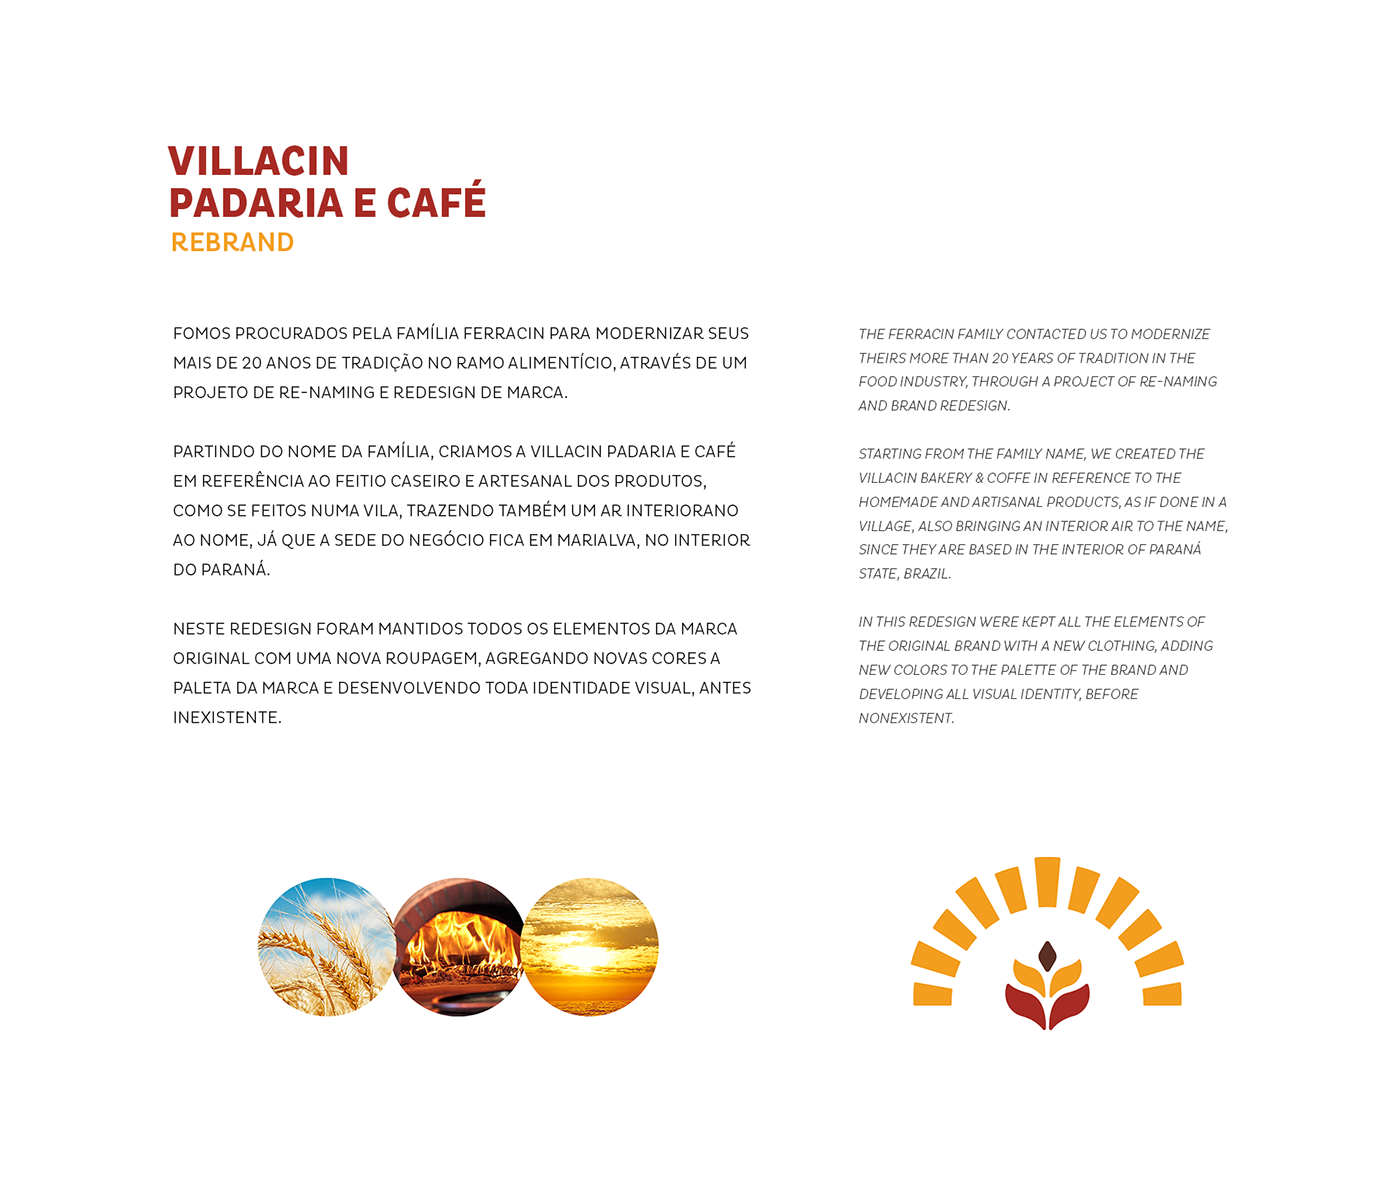 Padaria Coffee Villacin Rebrand brand naming Sun wheat wood oven dz9